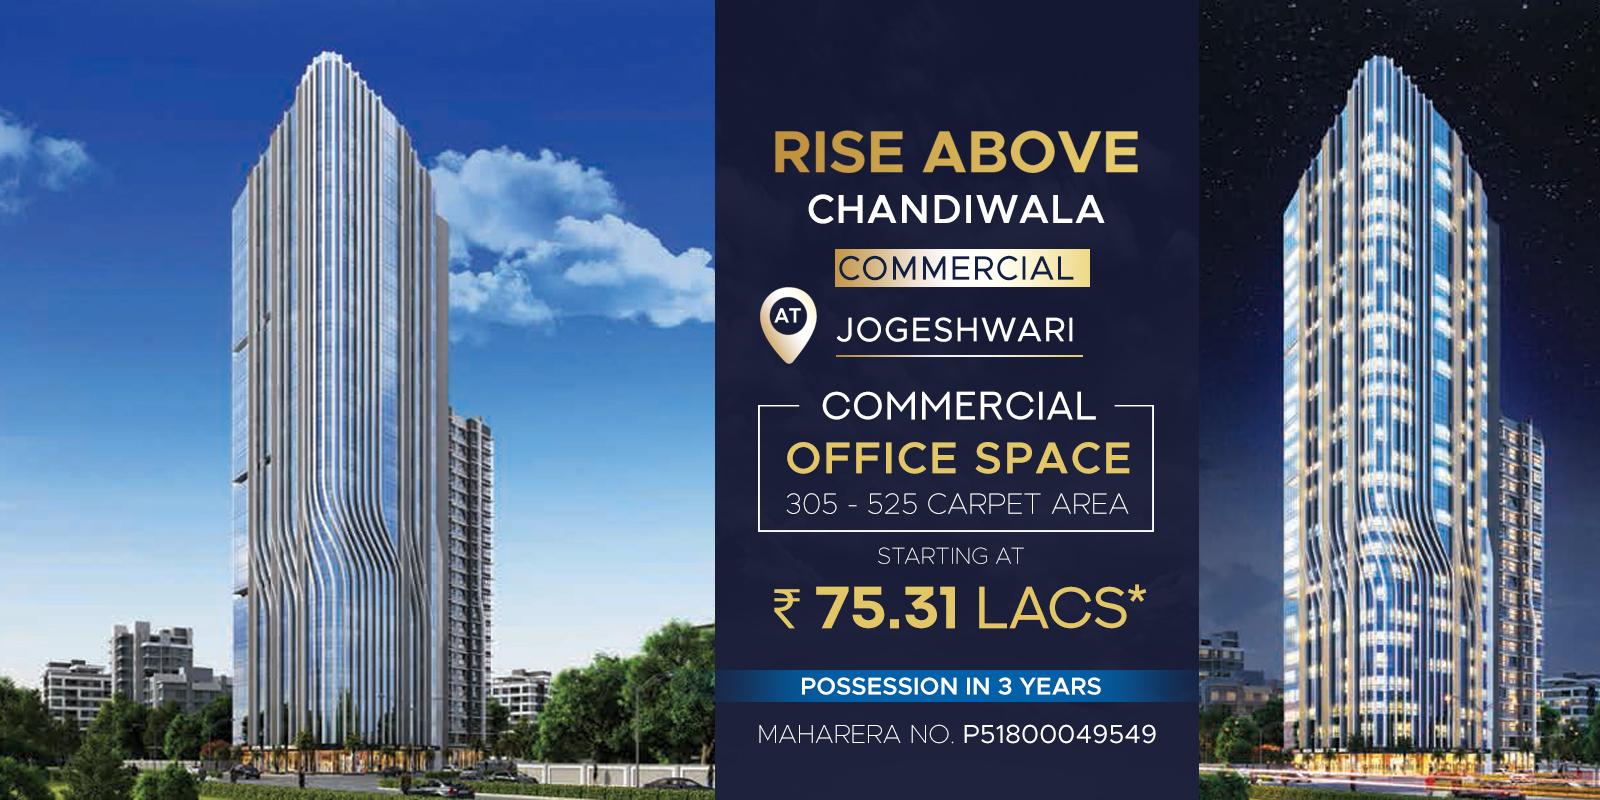 Rise Above Chandiwala Commercial Jogeshwari-RISE-ABOVE-CHANDIWALA-COMMERCIAL-banner.jpg